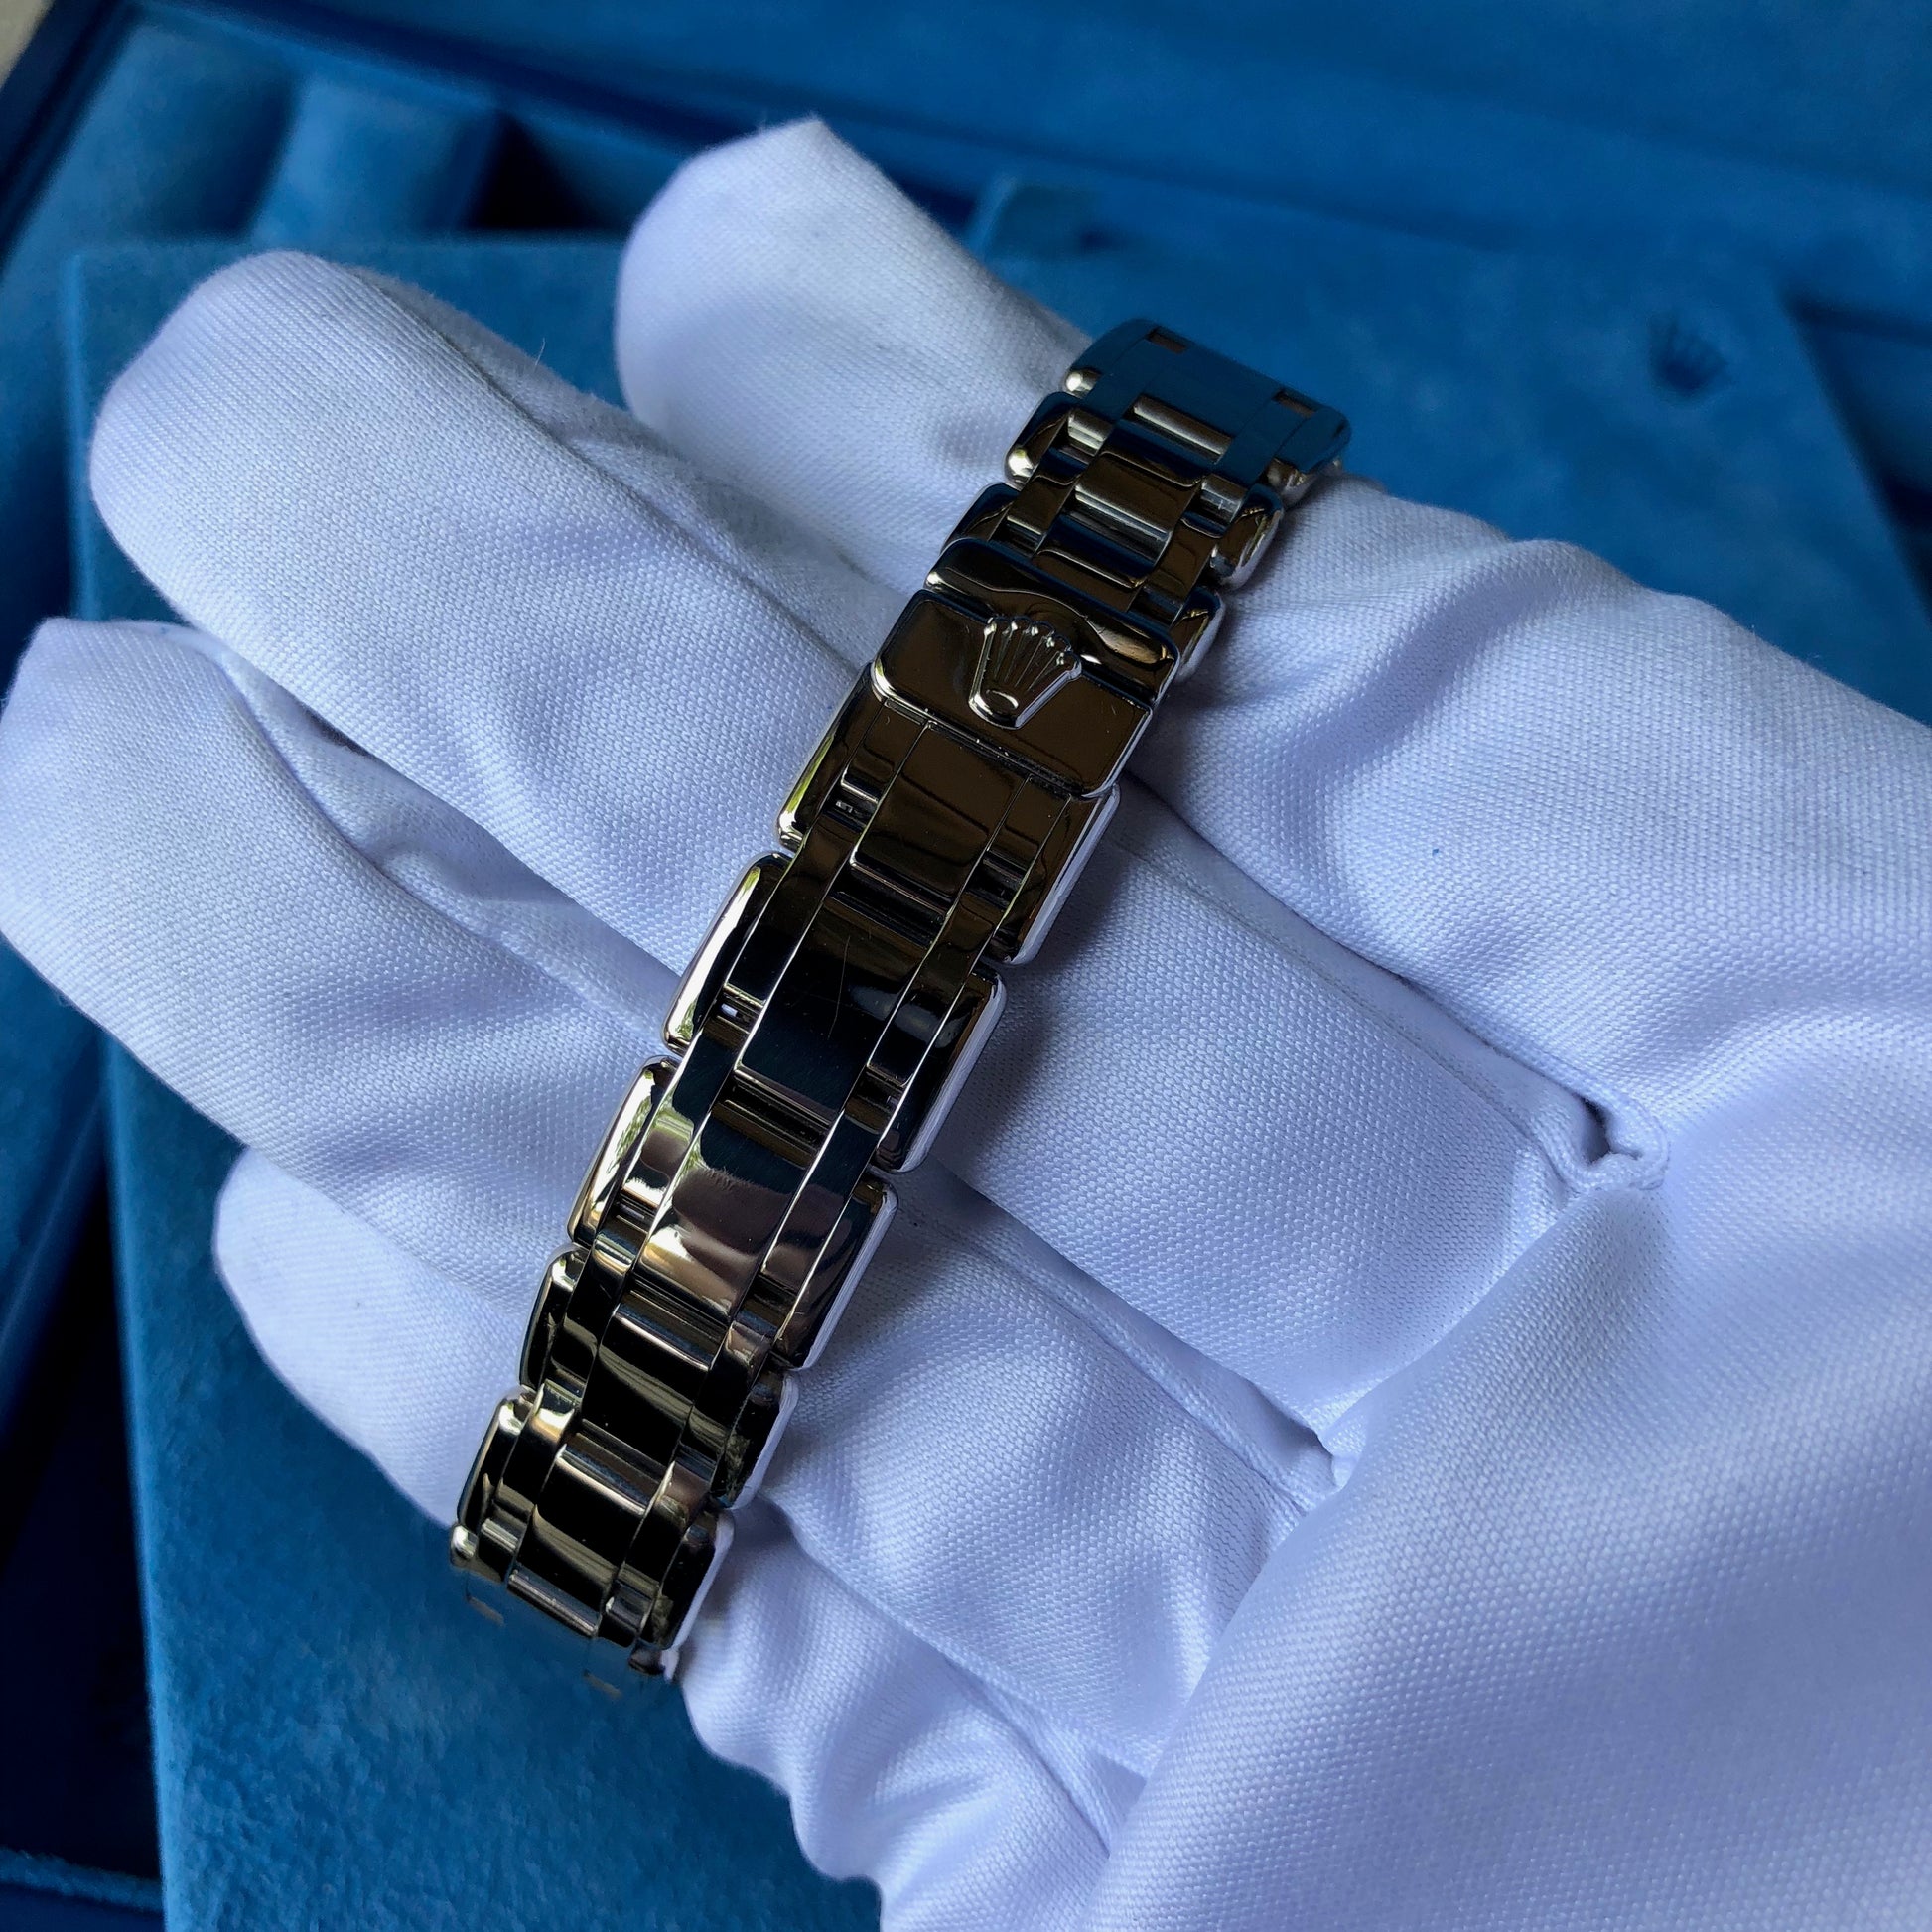 Cartier Diamond White Gold Love 6 Bracelet Pouch Papers